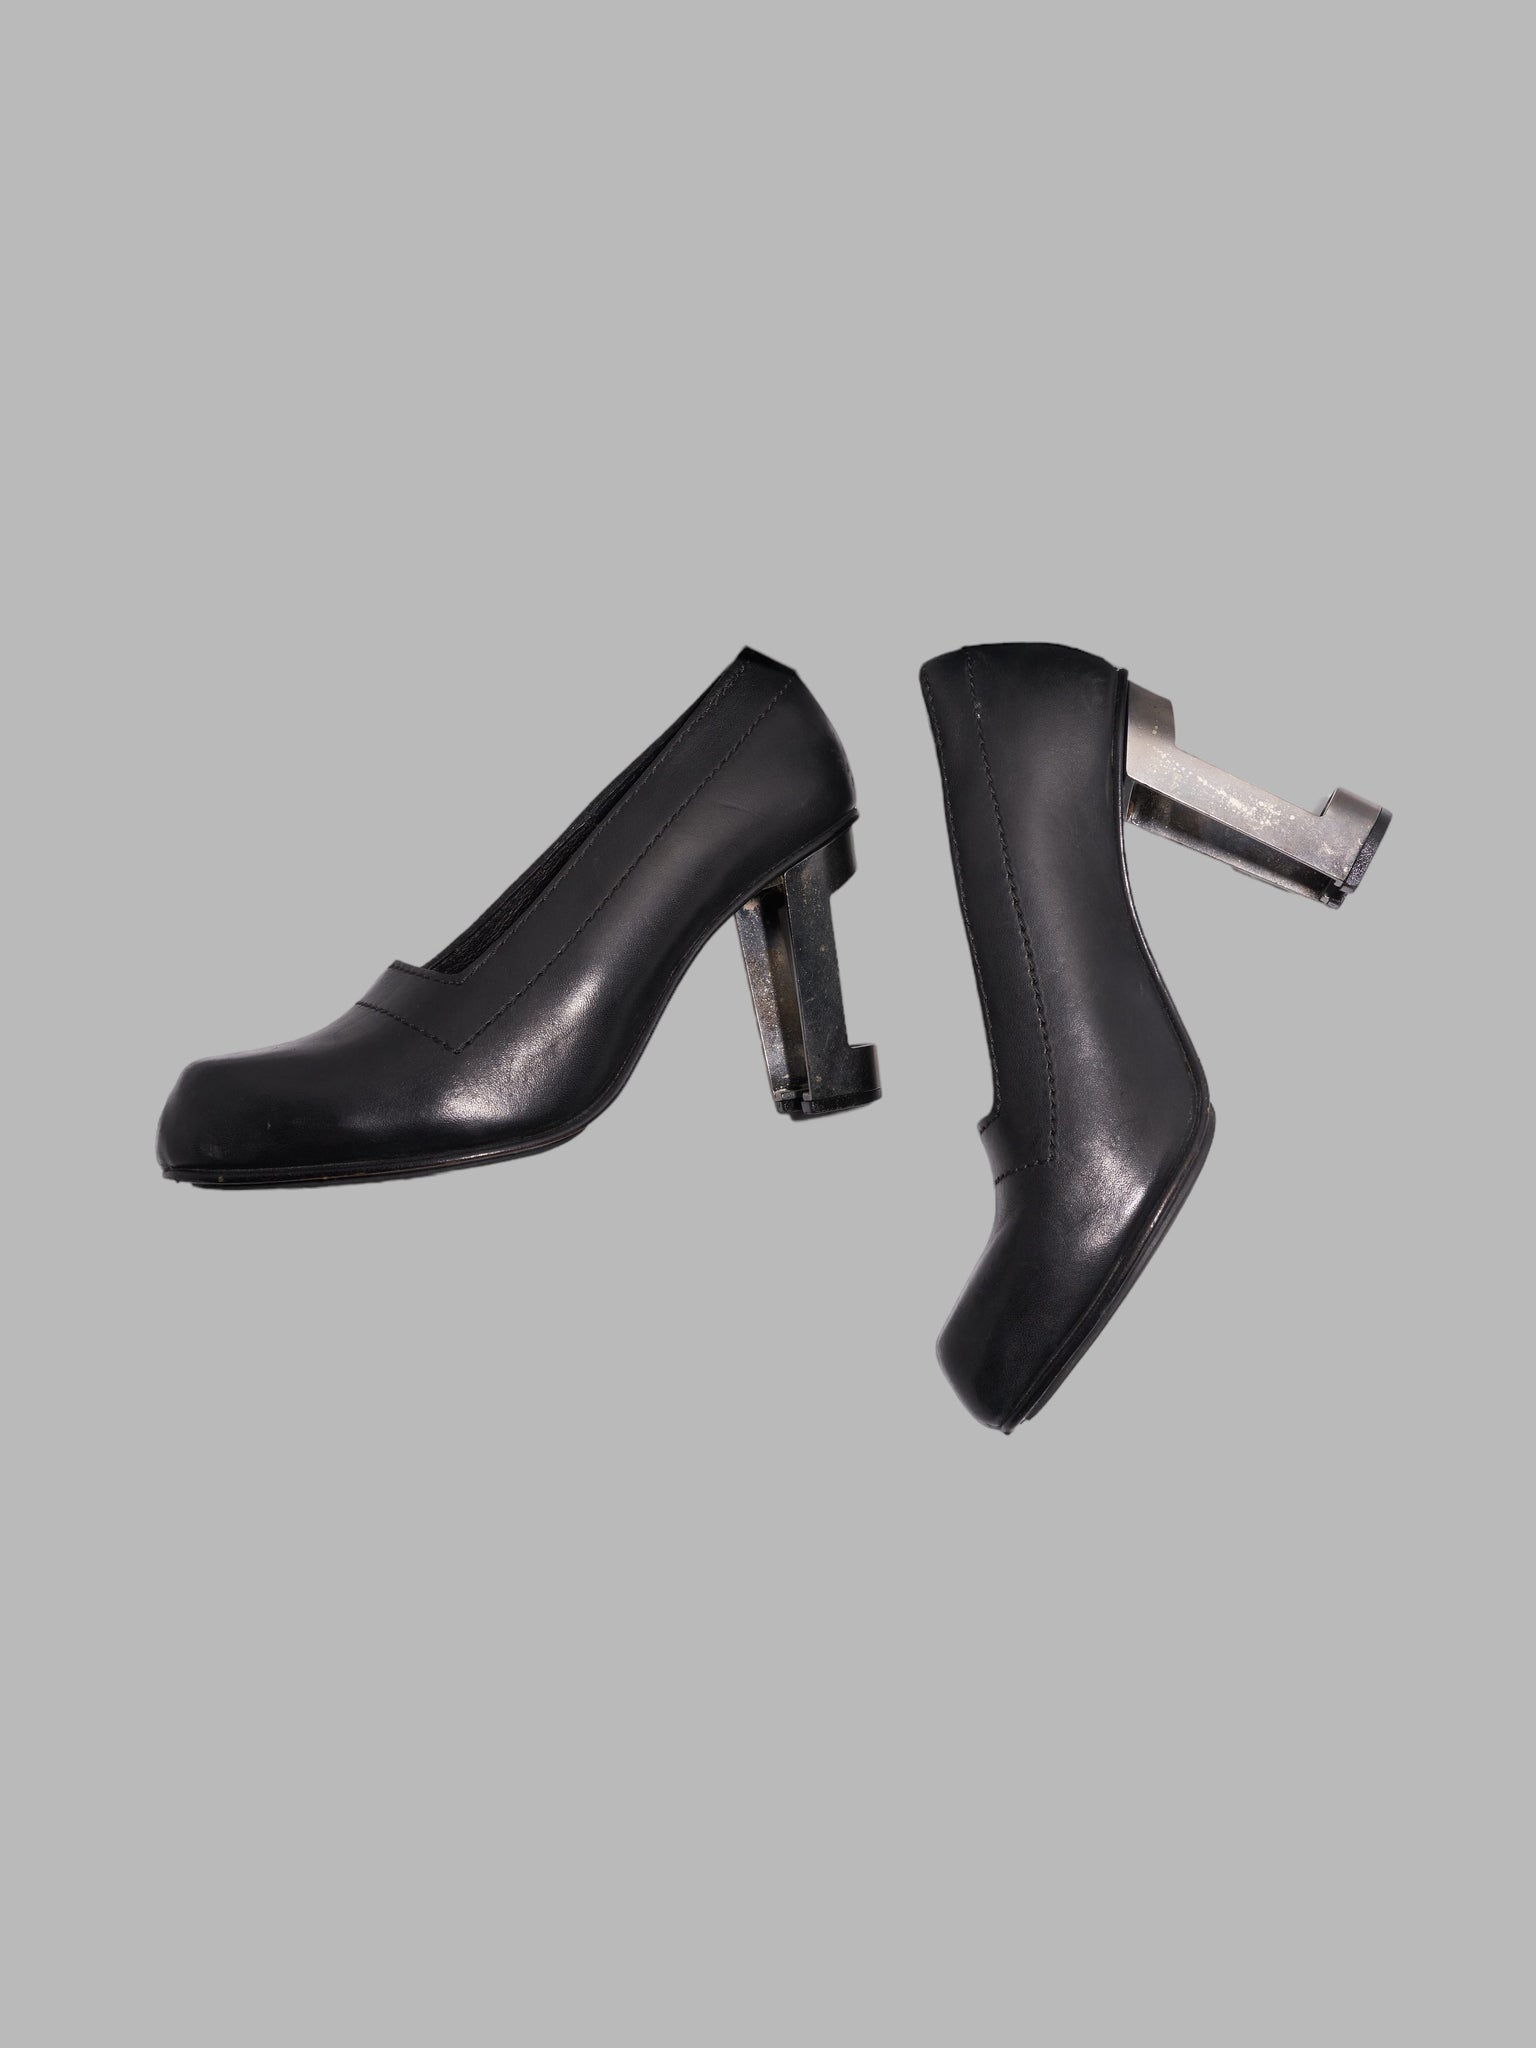 Dirk Bikkembergs 1990s black leather steel heel cutout high heel shoes - UK 4